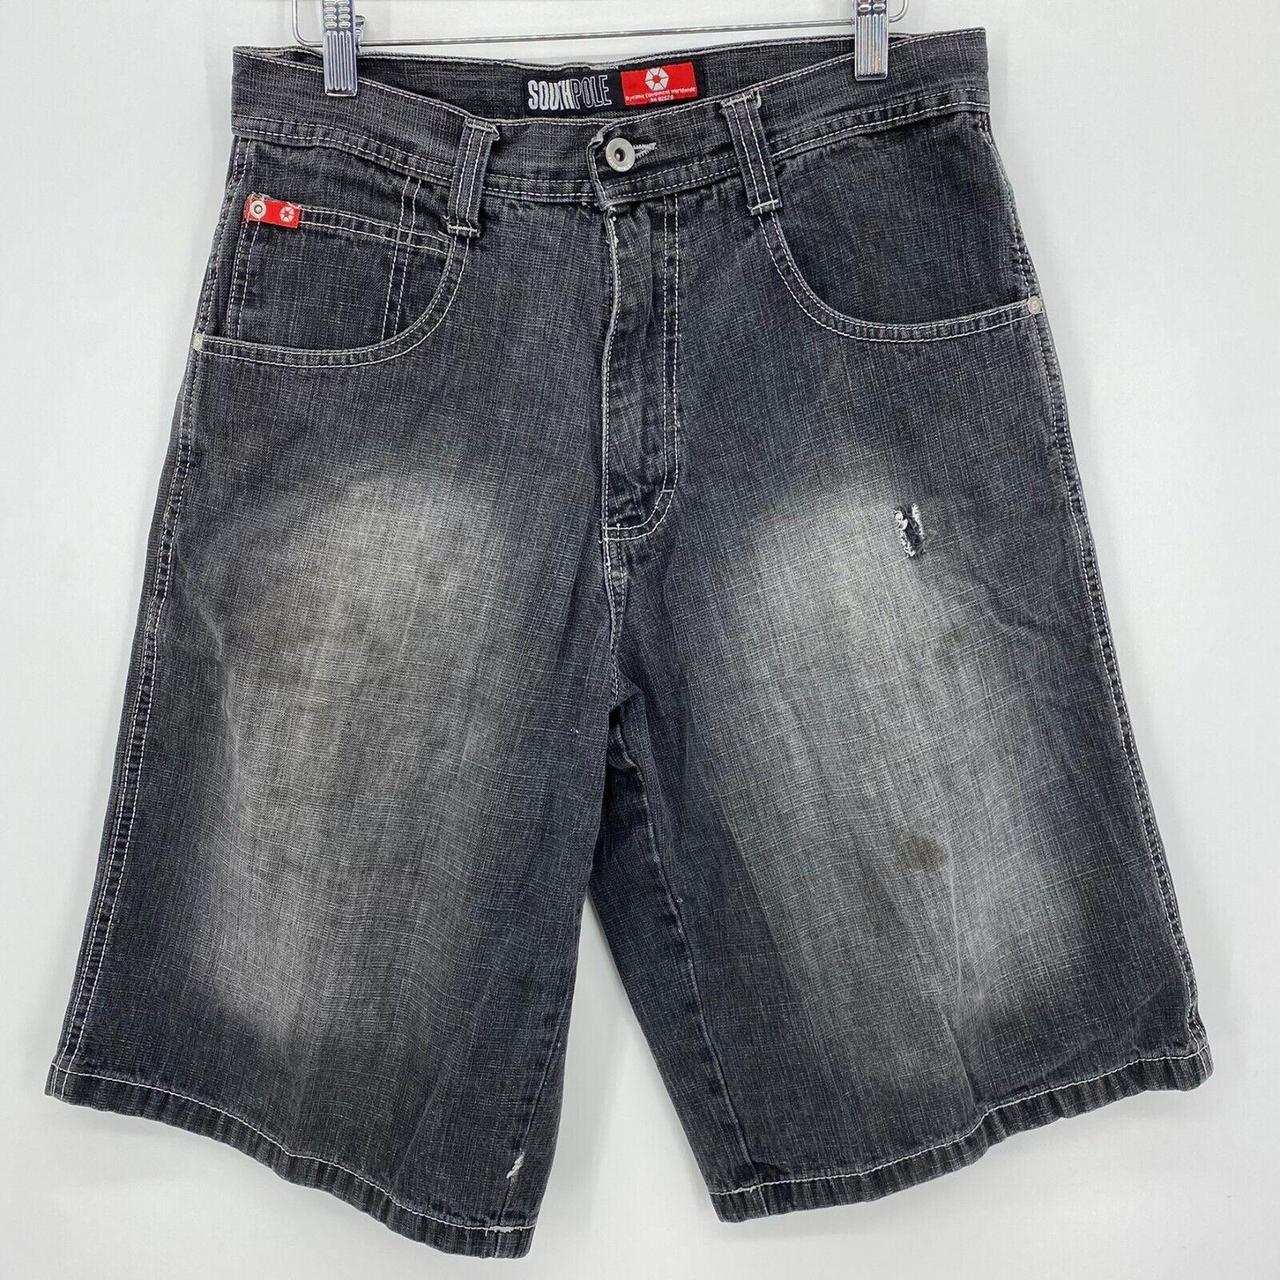 Product Image 1 - South Pole Denim Shorts Men's